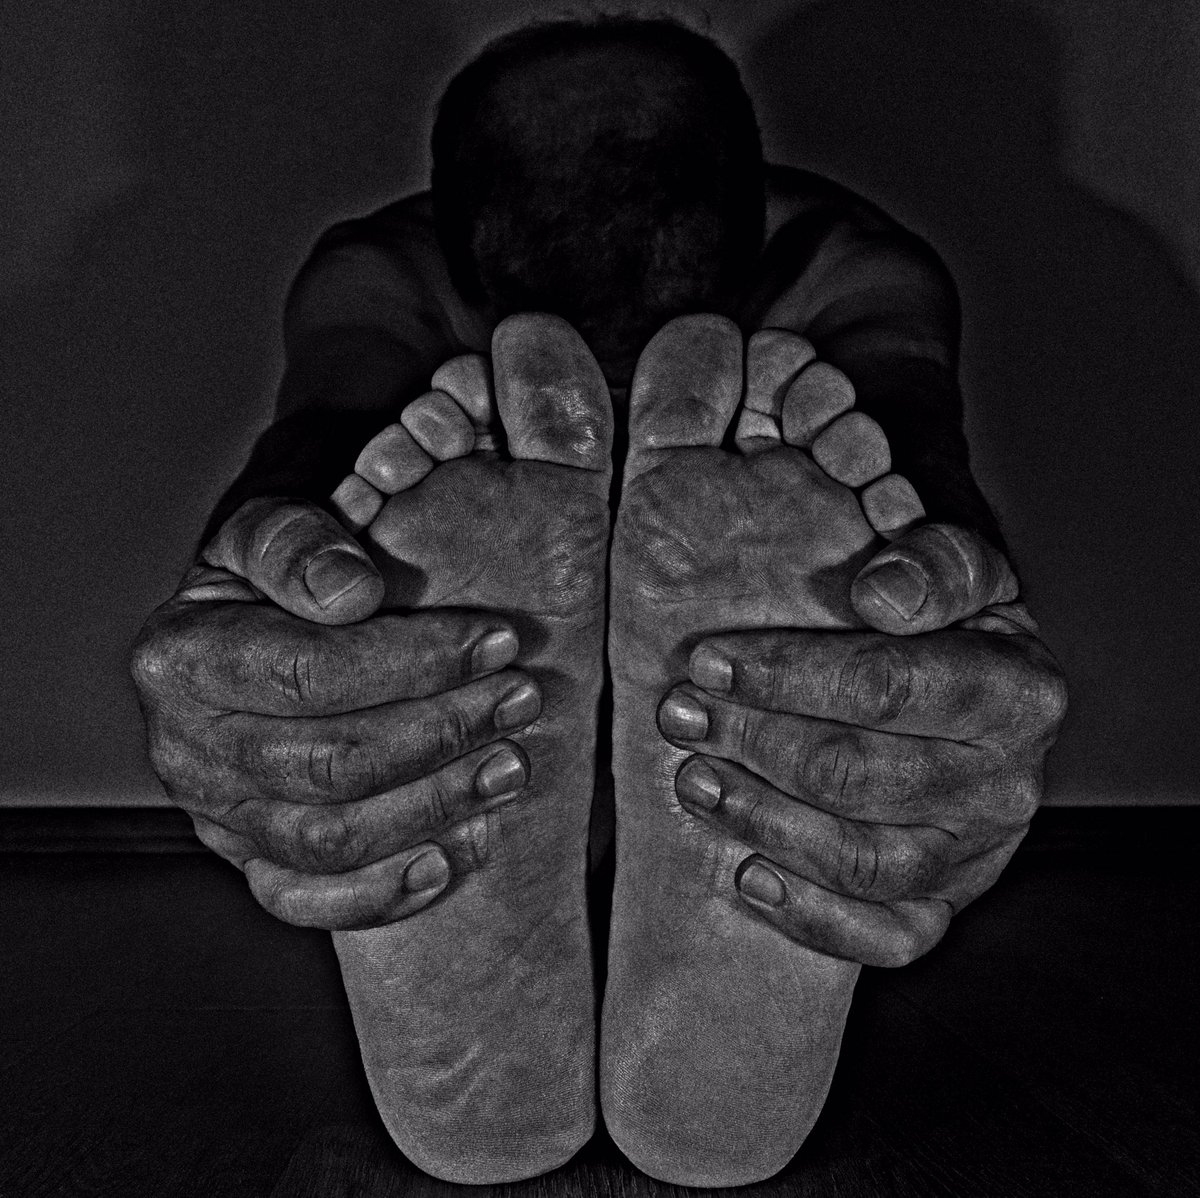 With hands and feet...Model, myself.😉
#schwarzweiss #schwarzweissfotografie #bw #bwphoto #bwphotography